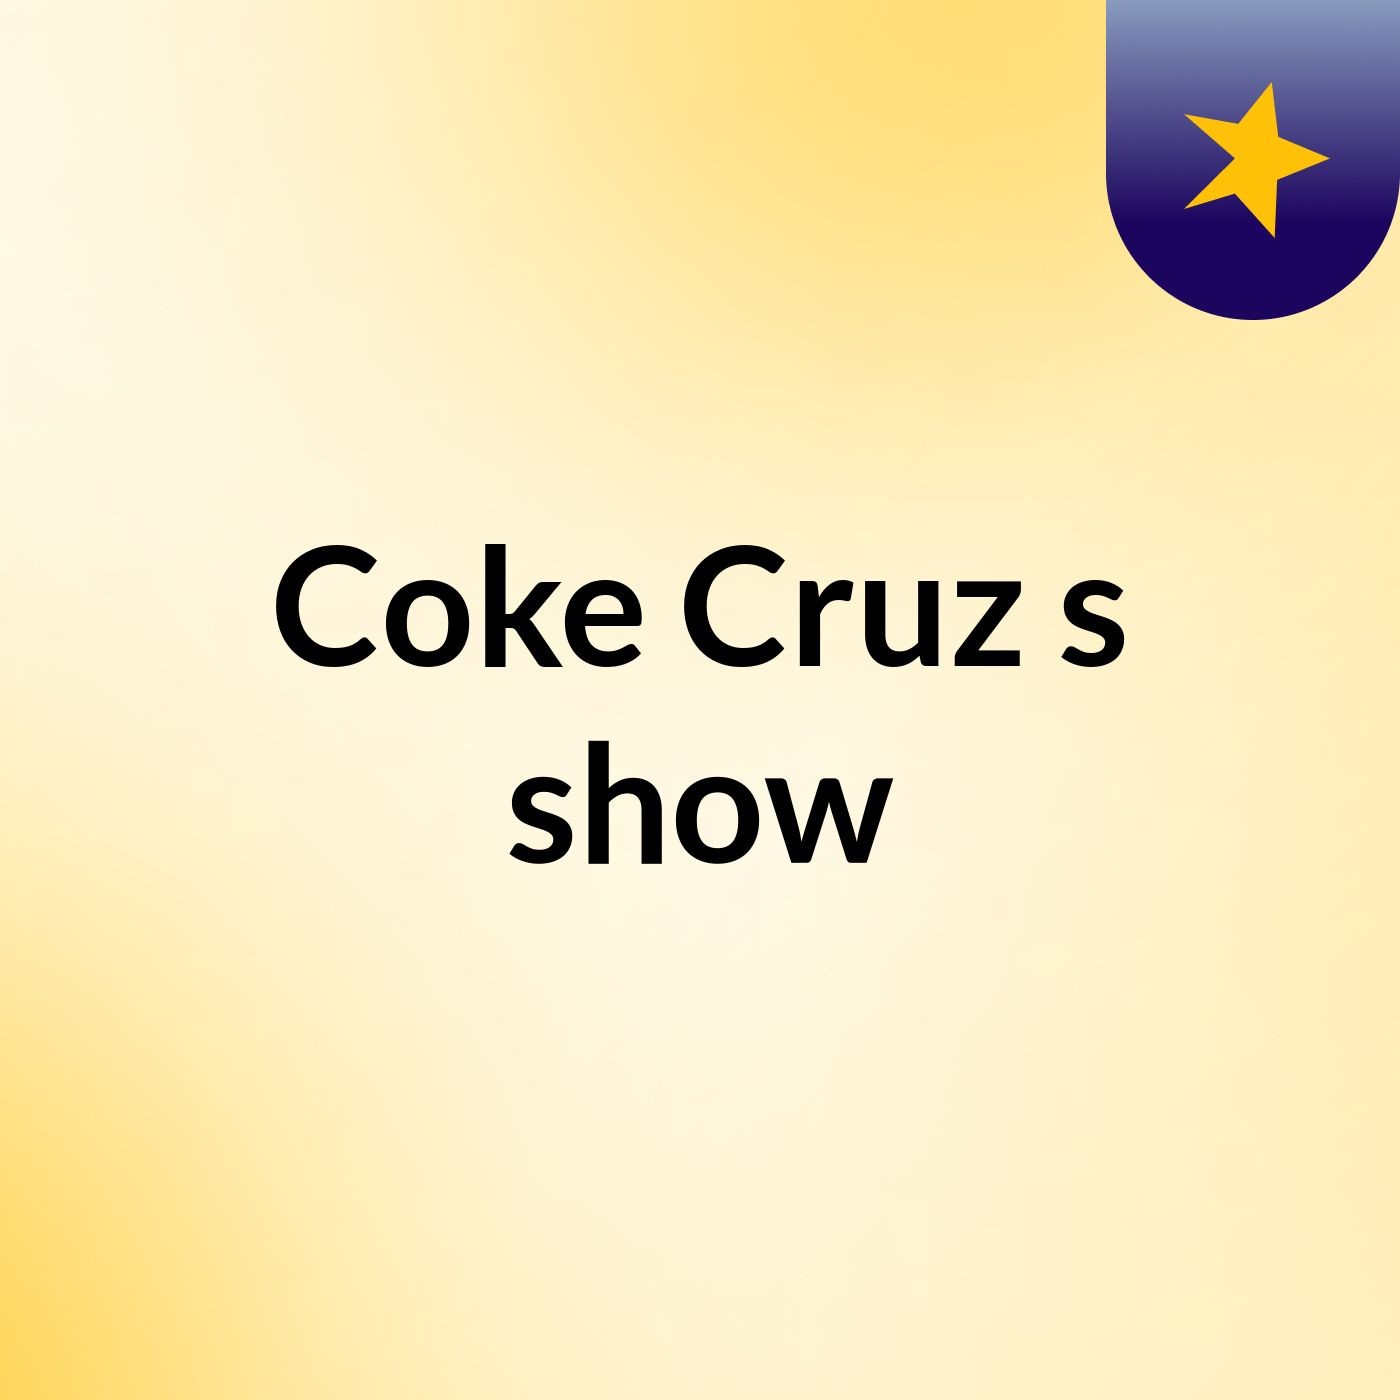 Coke Cruz's show